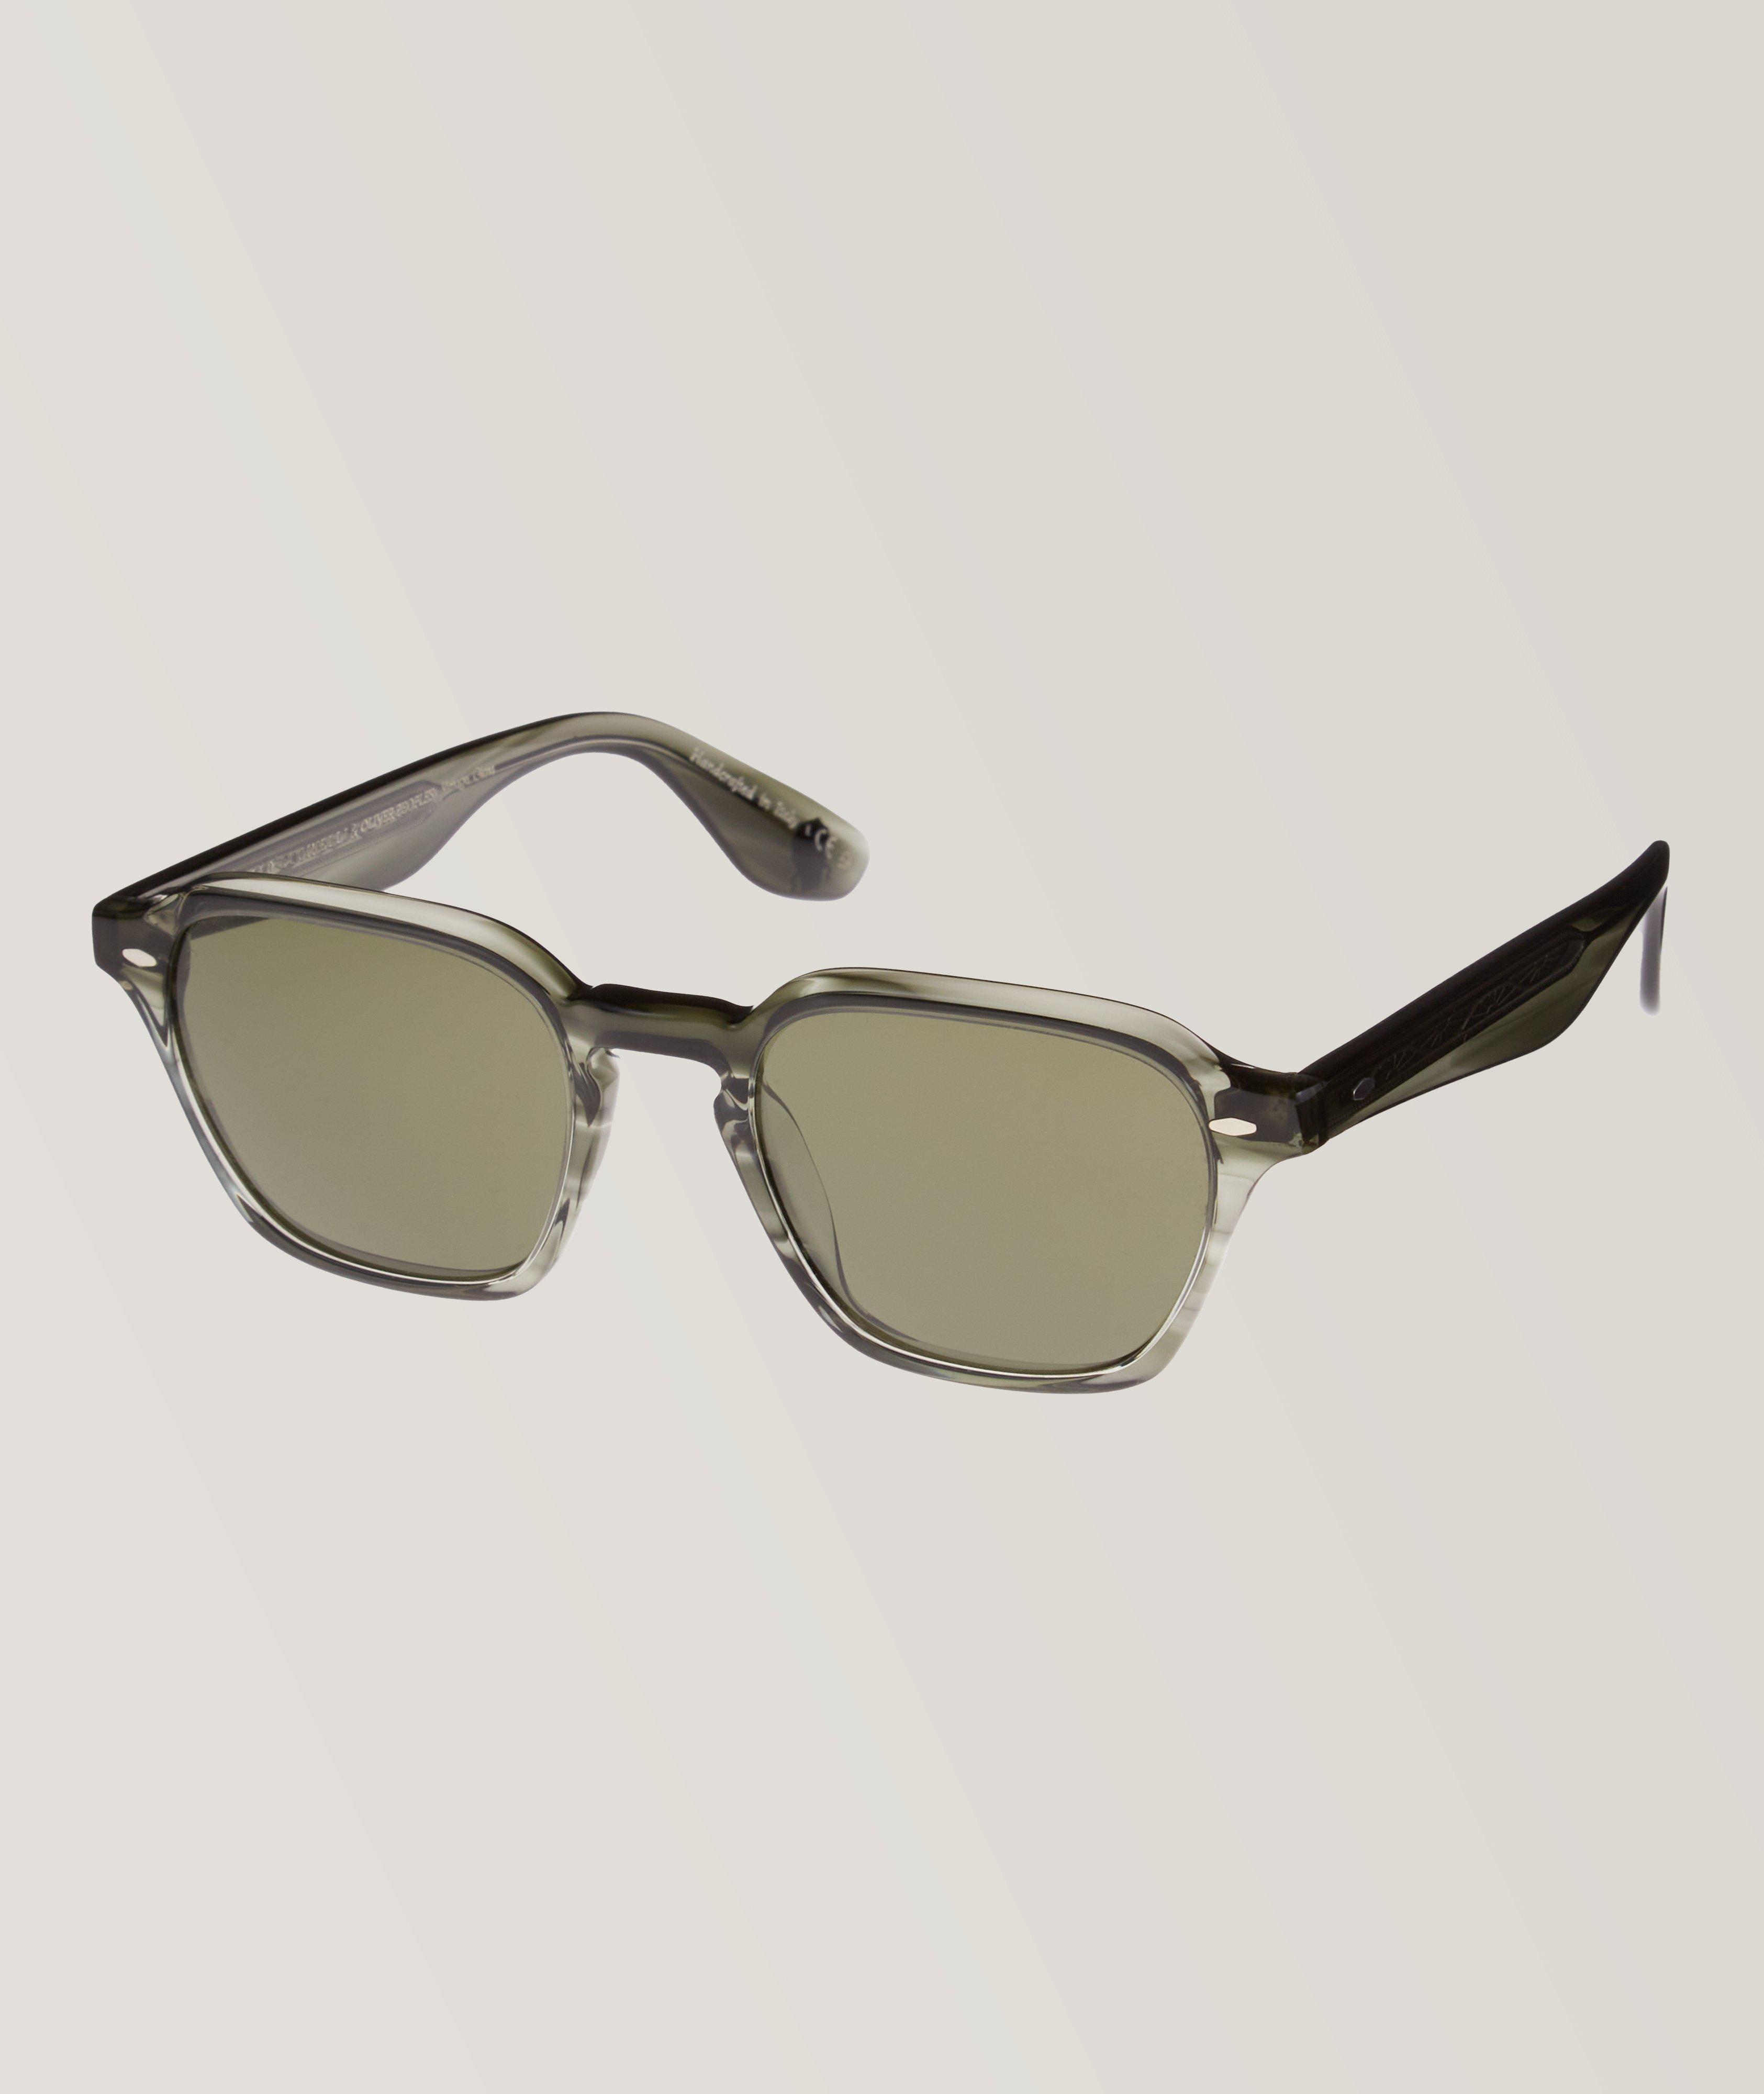 Griffo Square Frame Sunglasses image 0